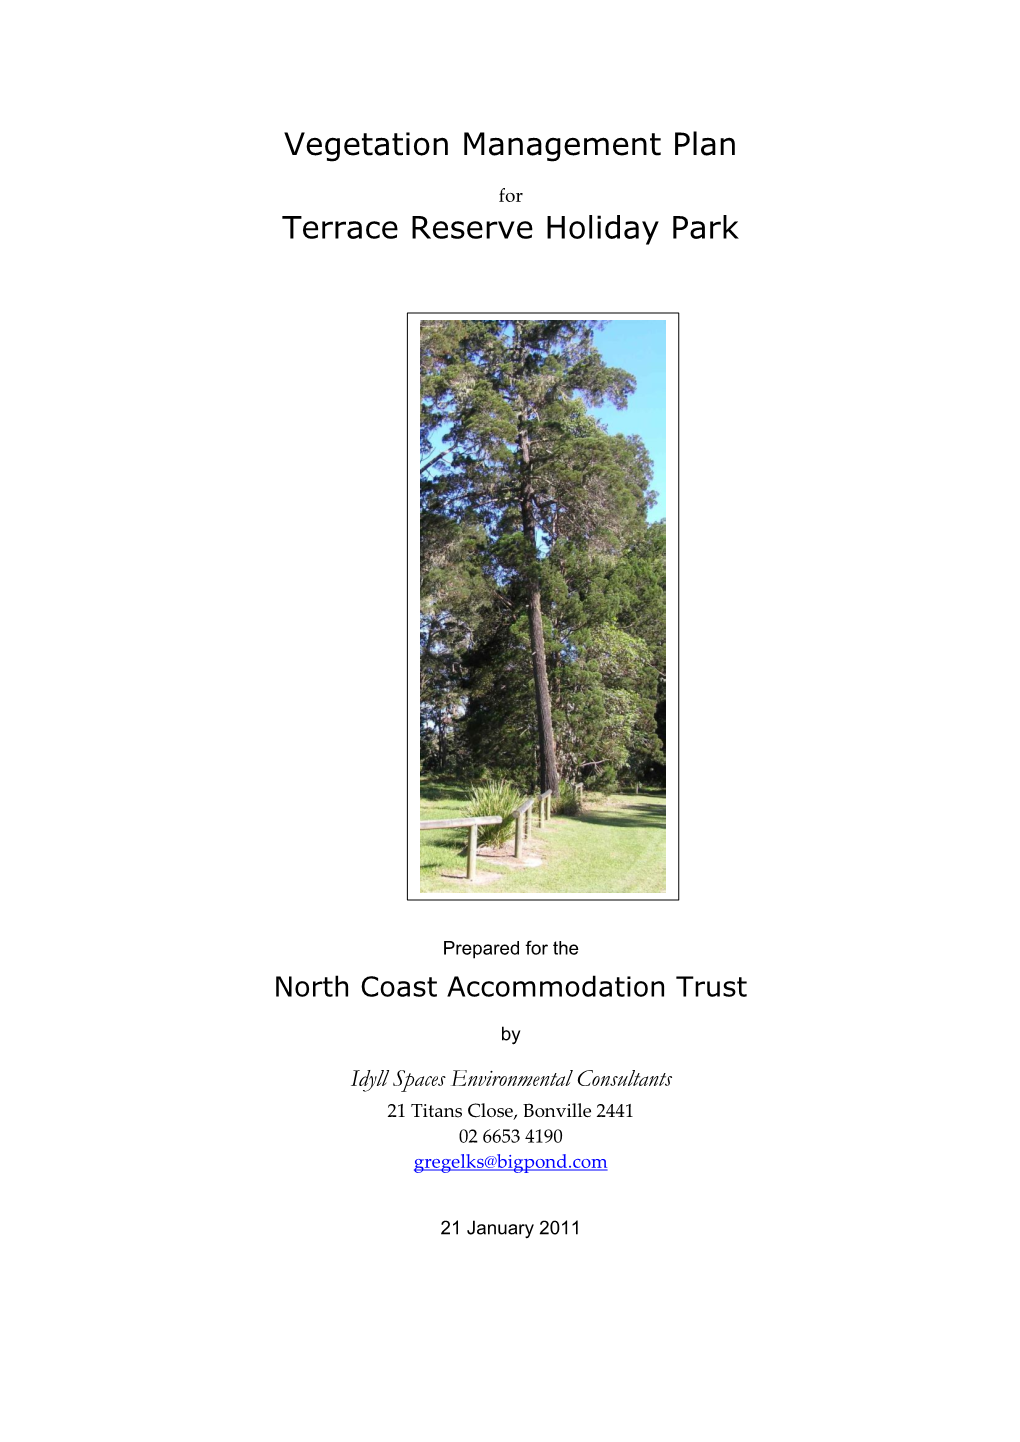 Vegetation Management Plan Terrace Reserve Holiday Park